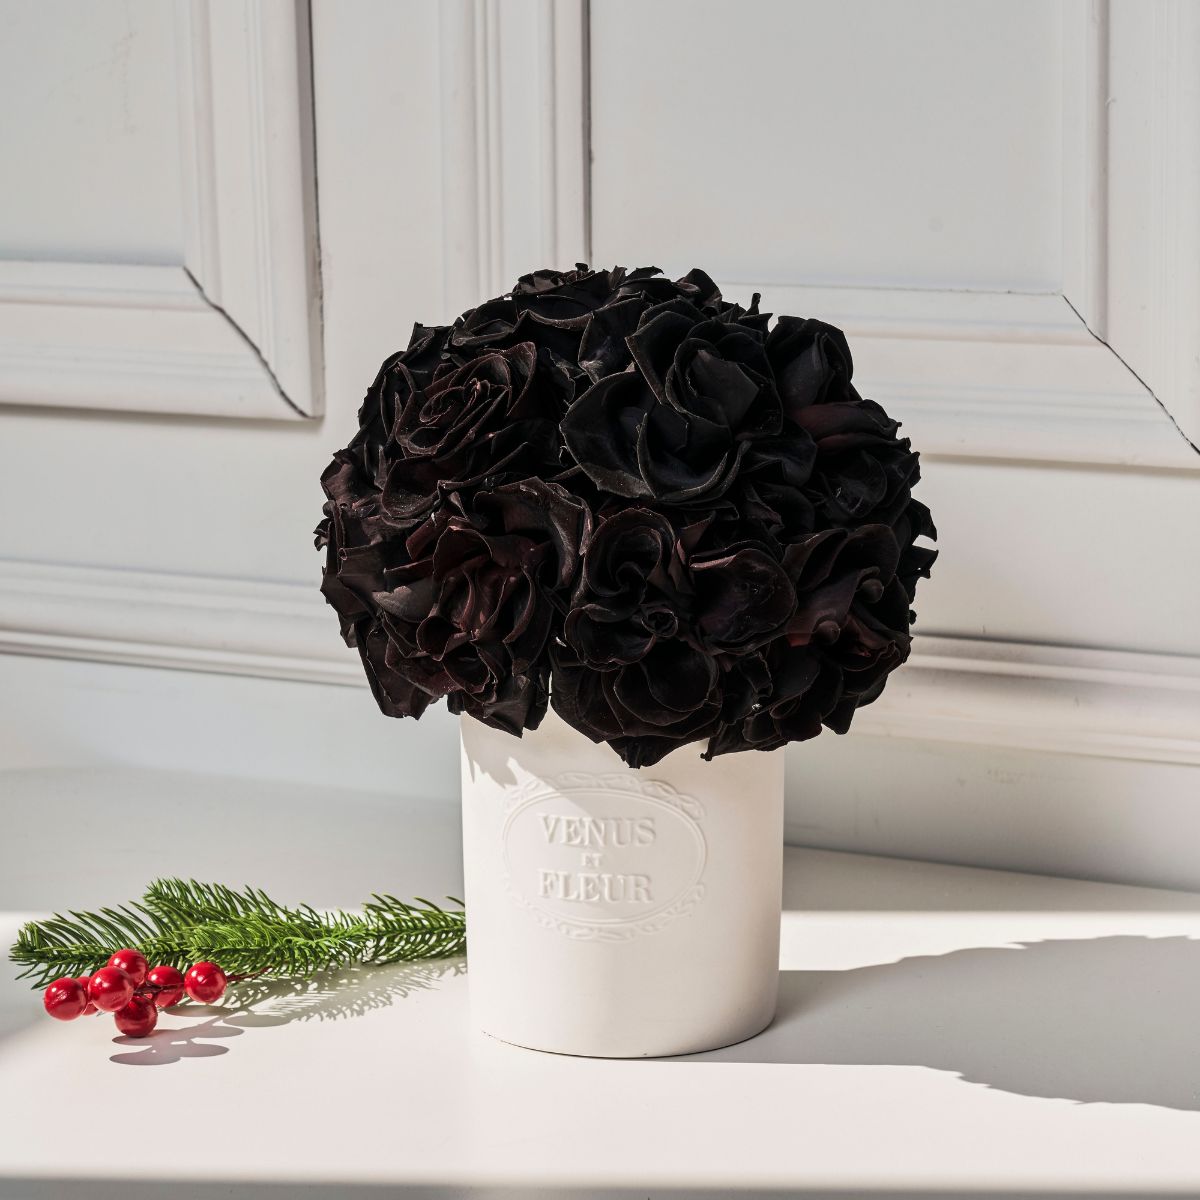 What Do Black Roses Mean? – Rosaholics